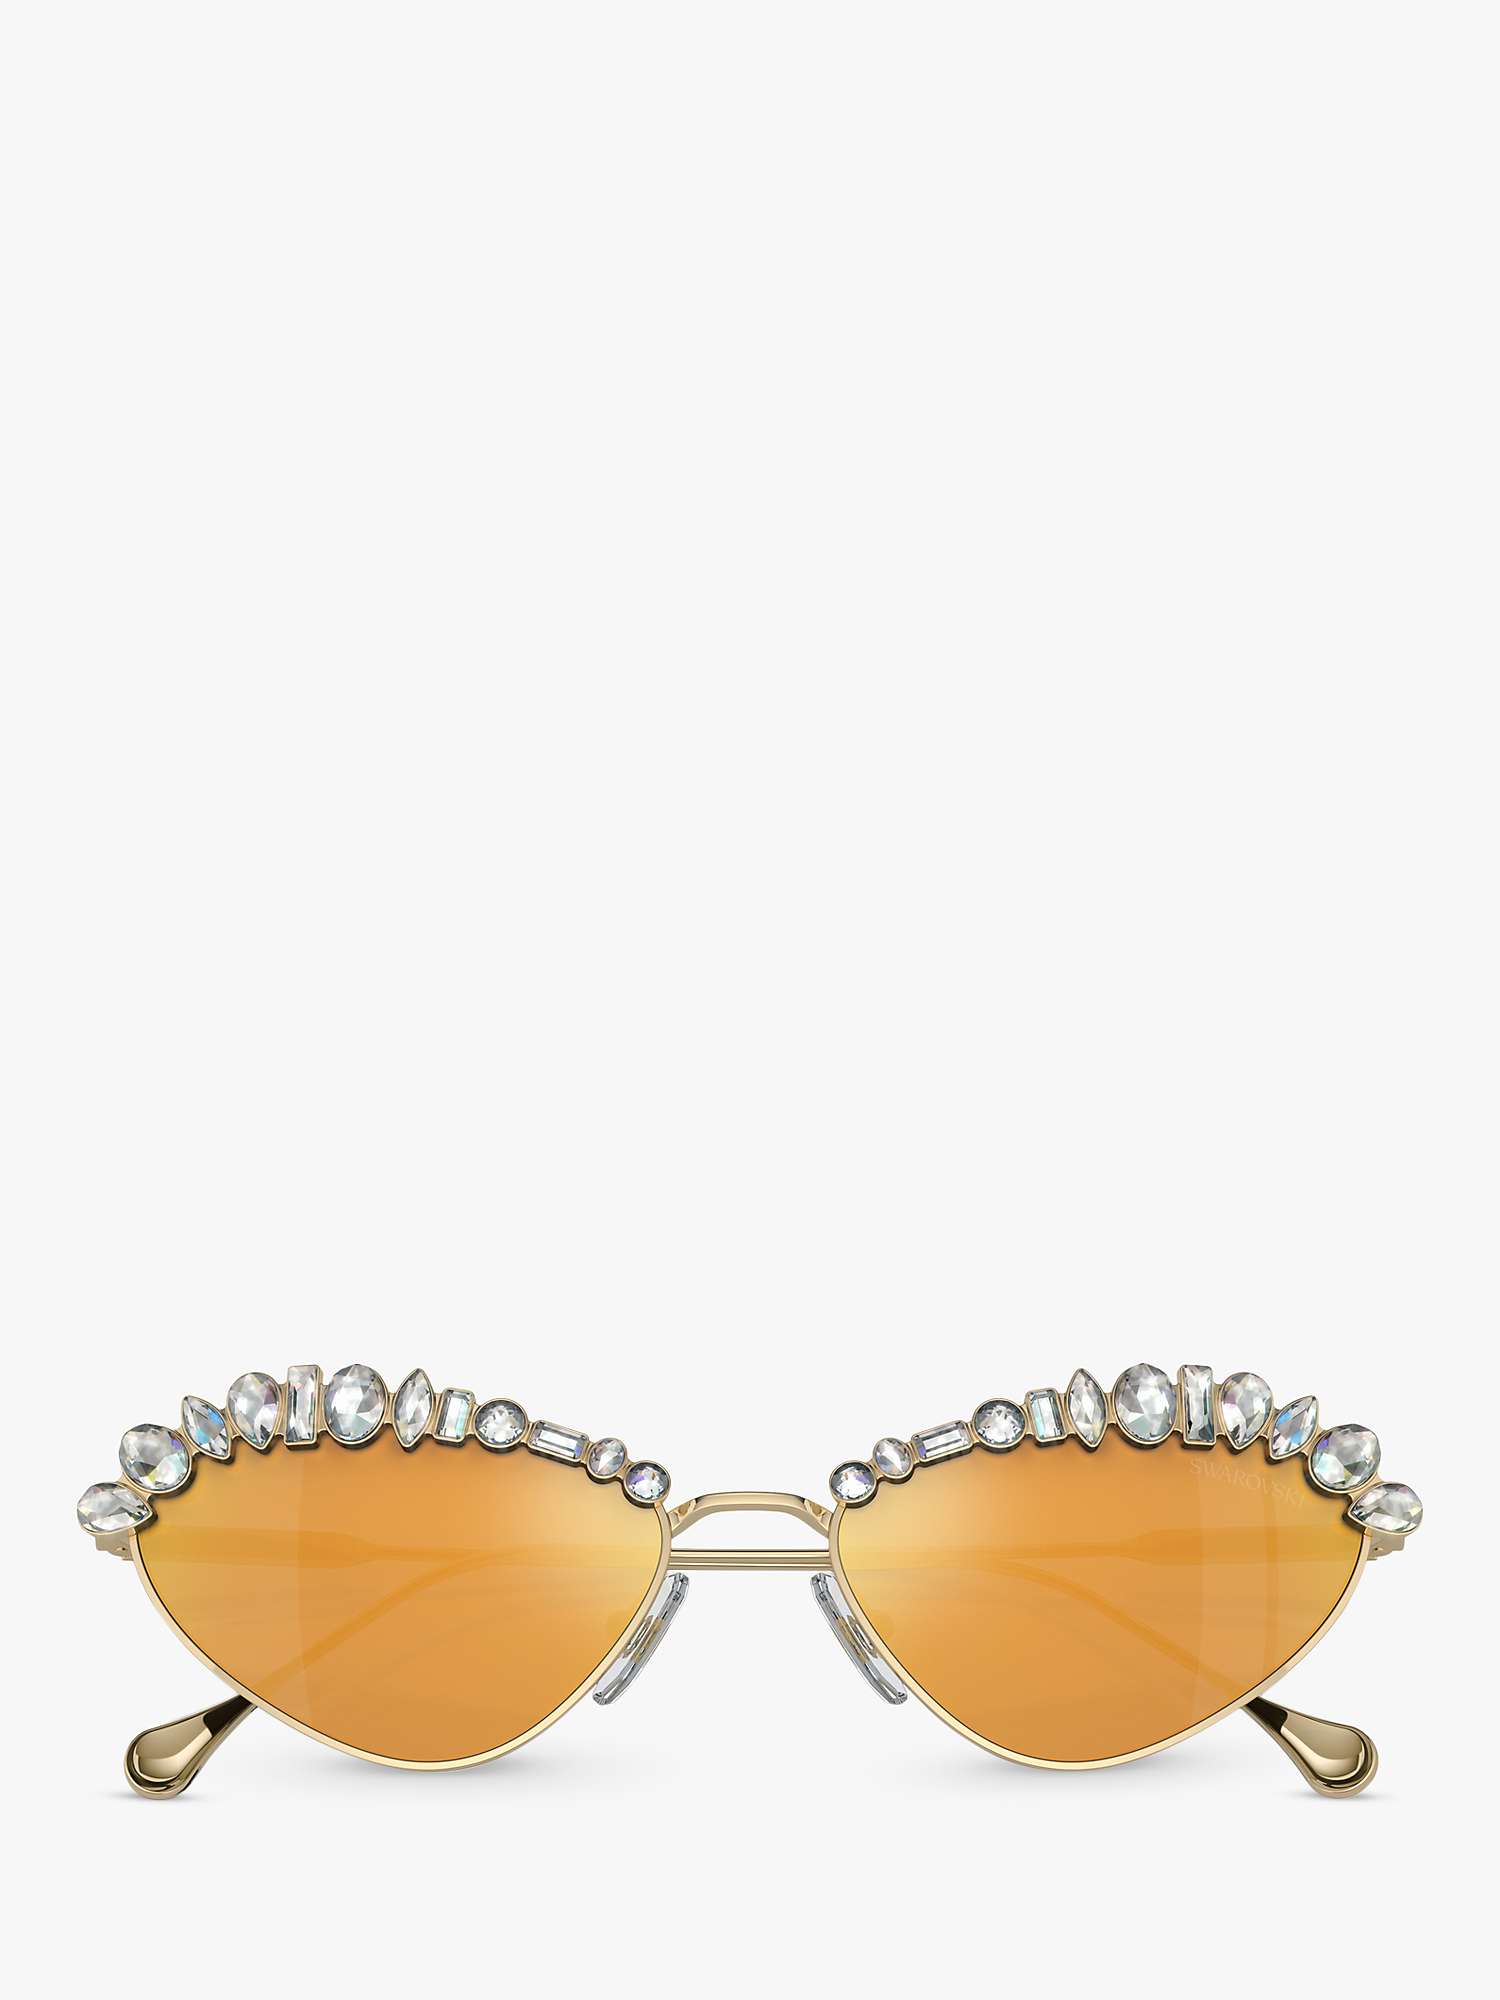 Buy Swarovski SK7009 Women's Crystal Cat's Eye Sunglasses, Pale Gold/Mirror Orange Online at johnlewis.com